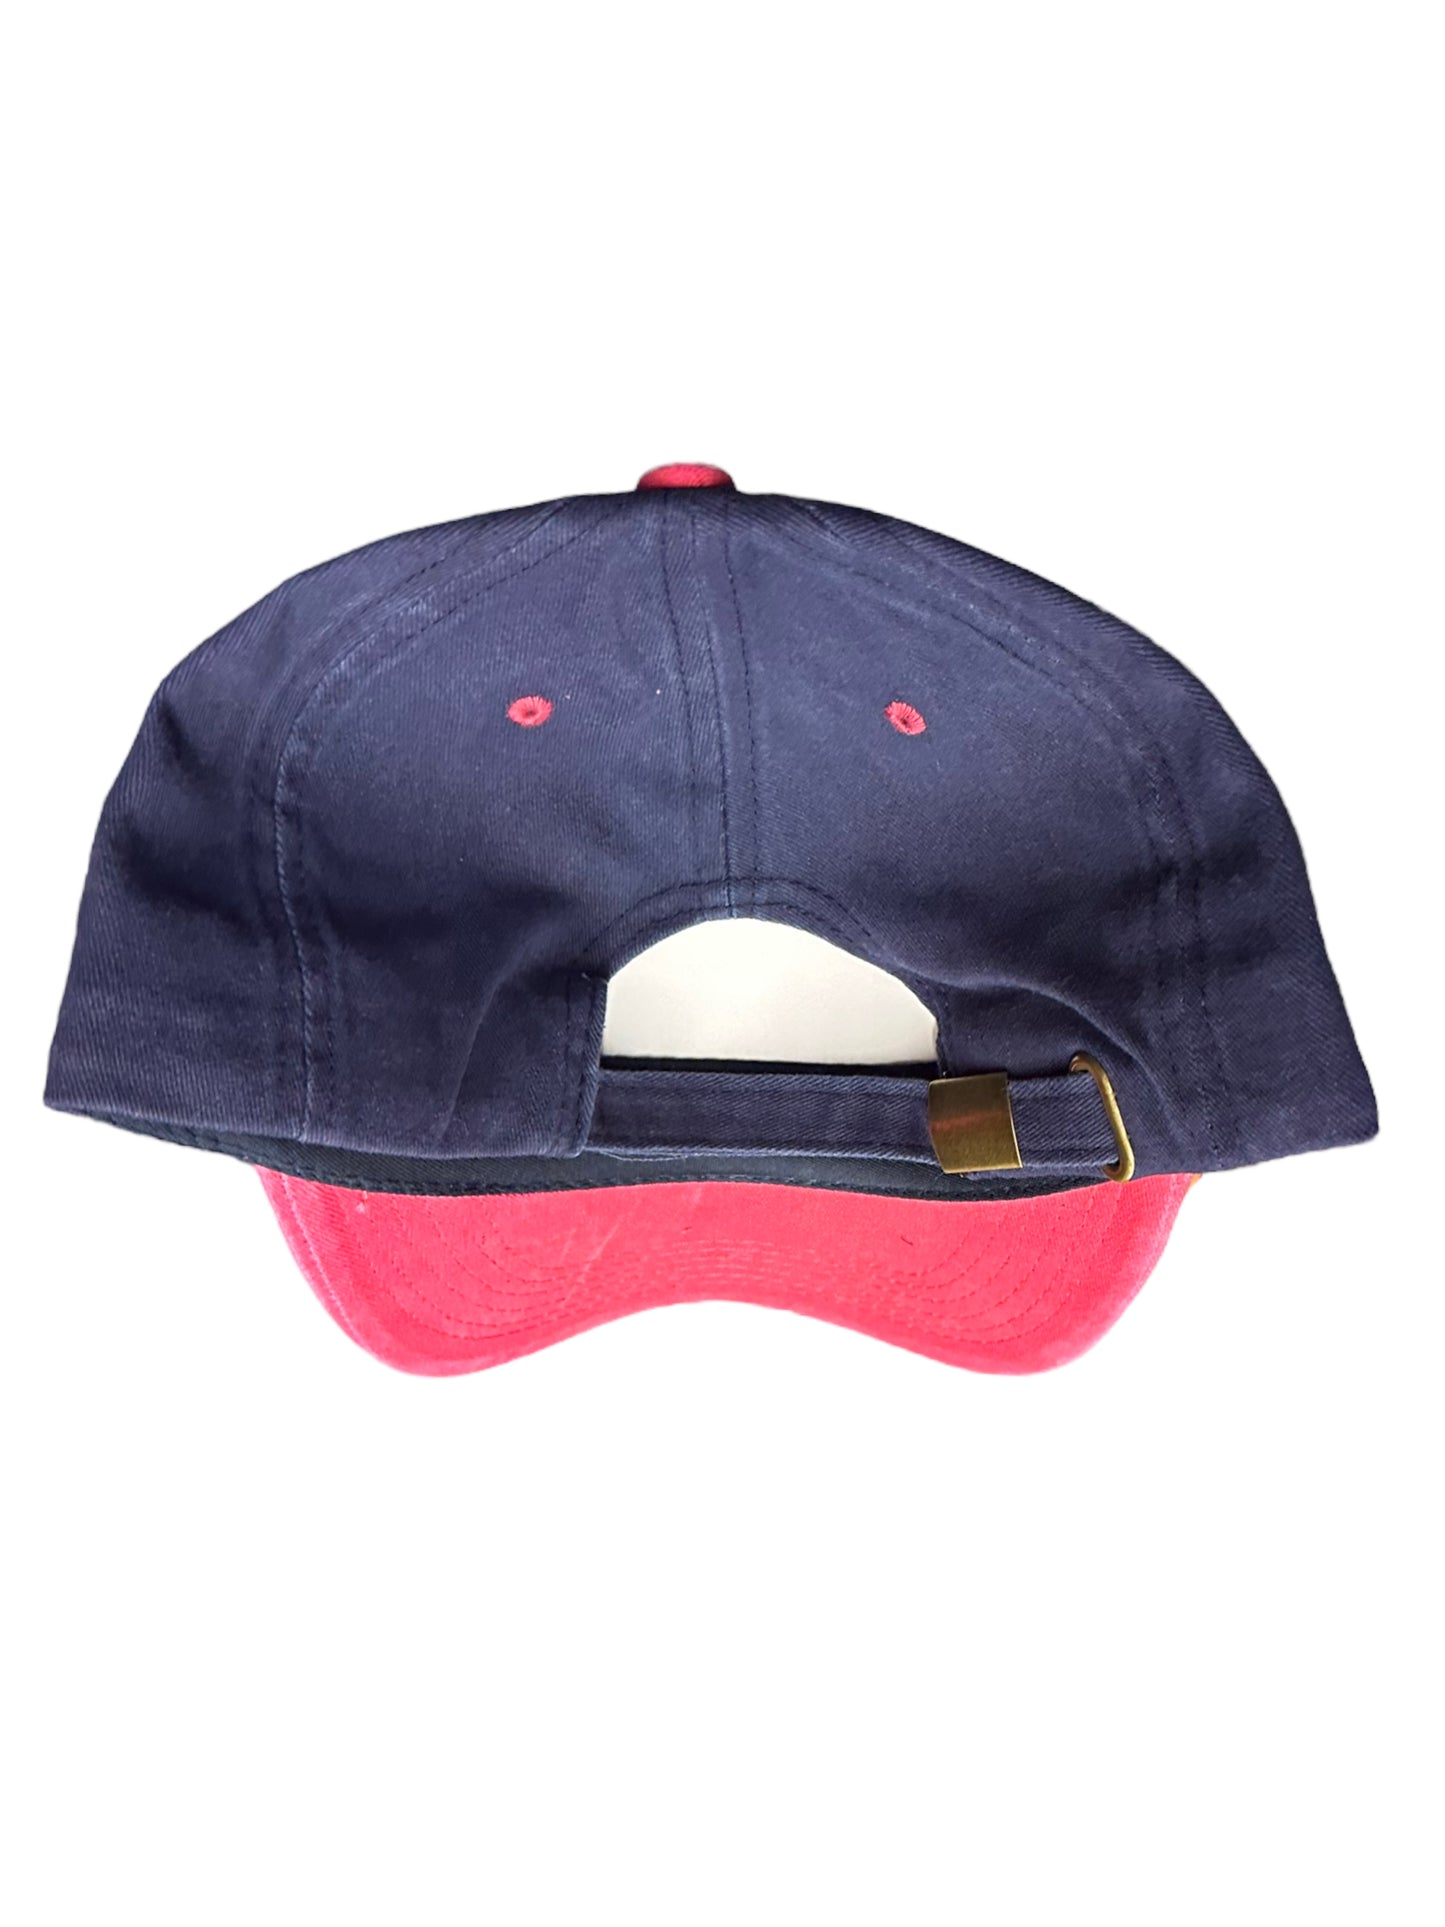 Blue and red baseball cap strapback